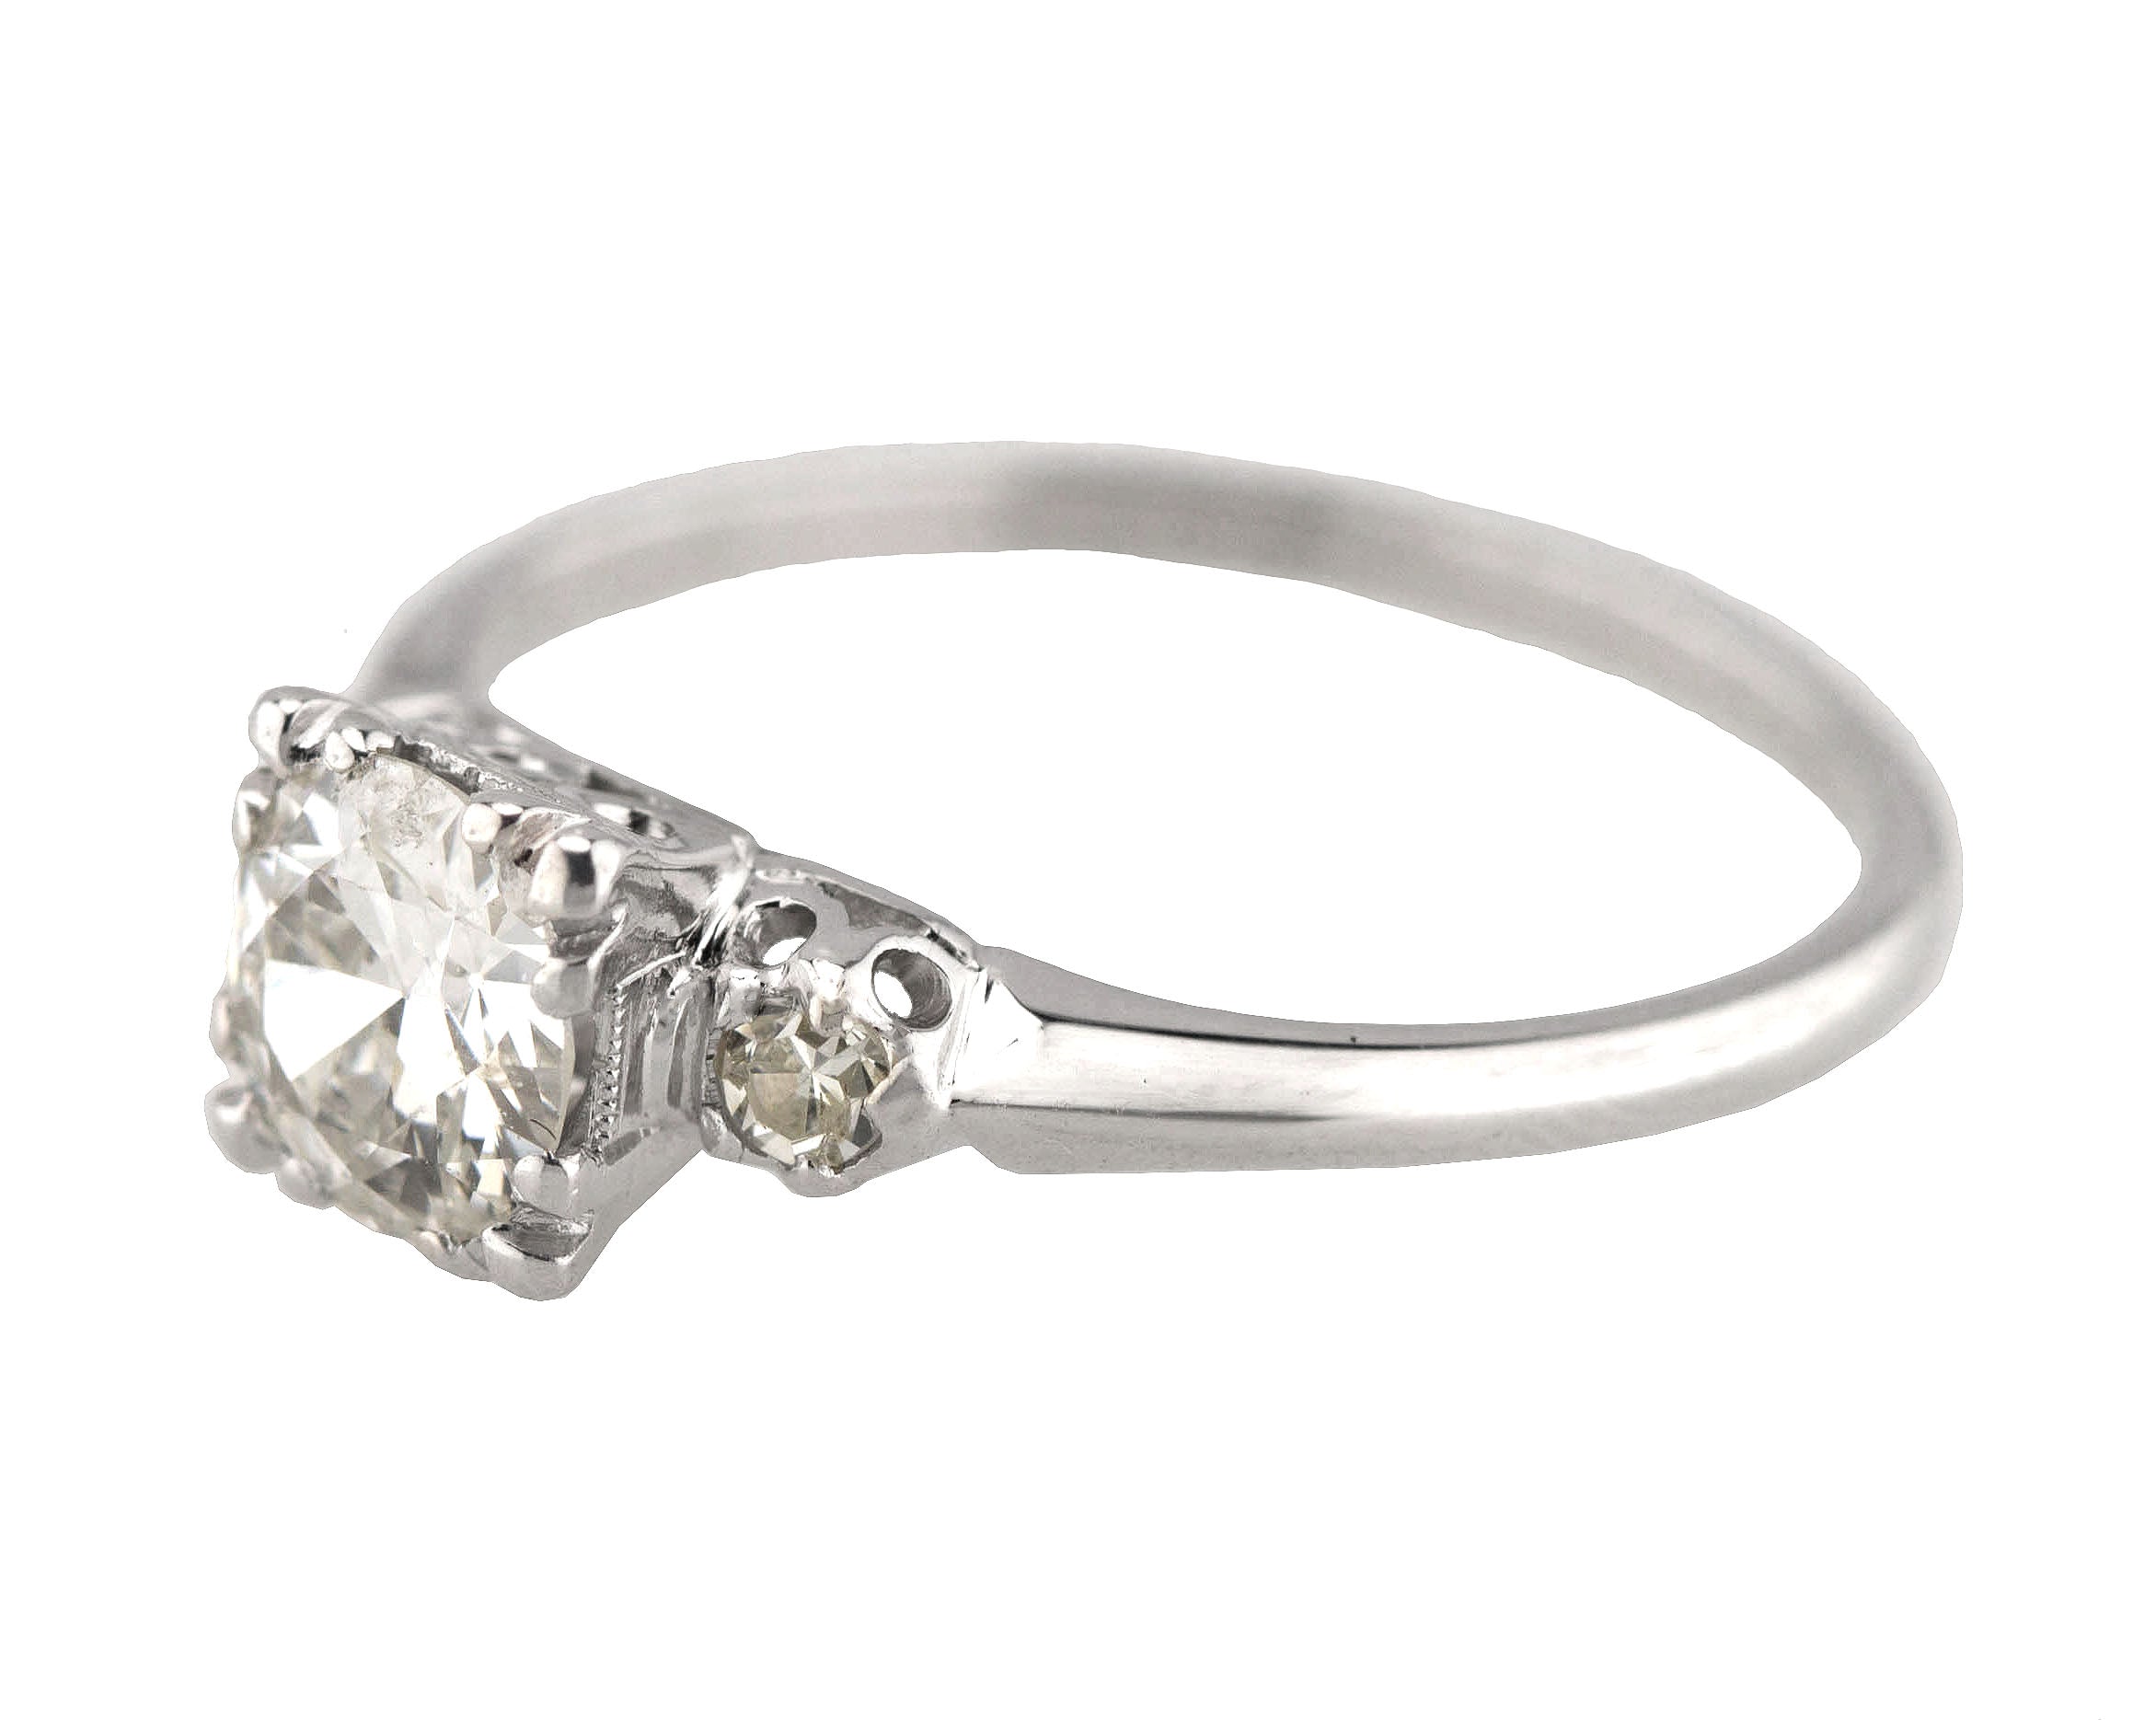 Antique Art Deco 18K White Gold 0.90 CT Old European Cut Diamond Engagement Ring